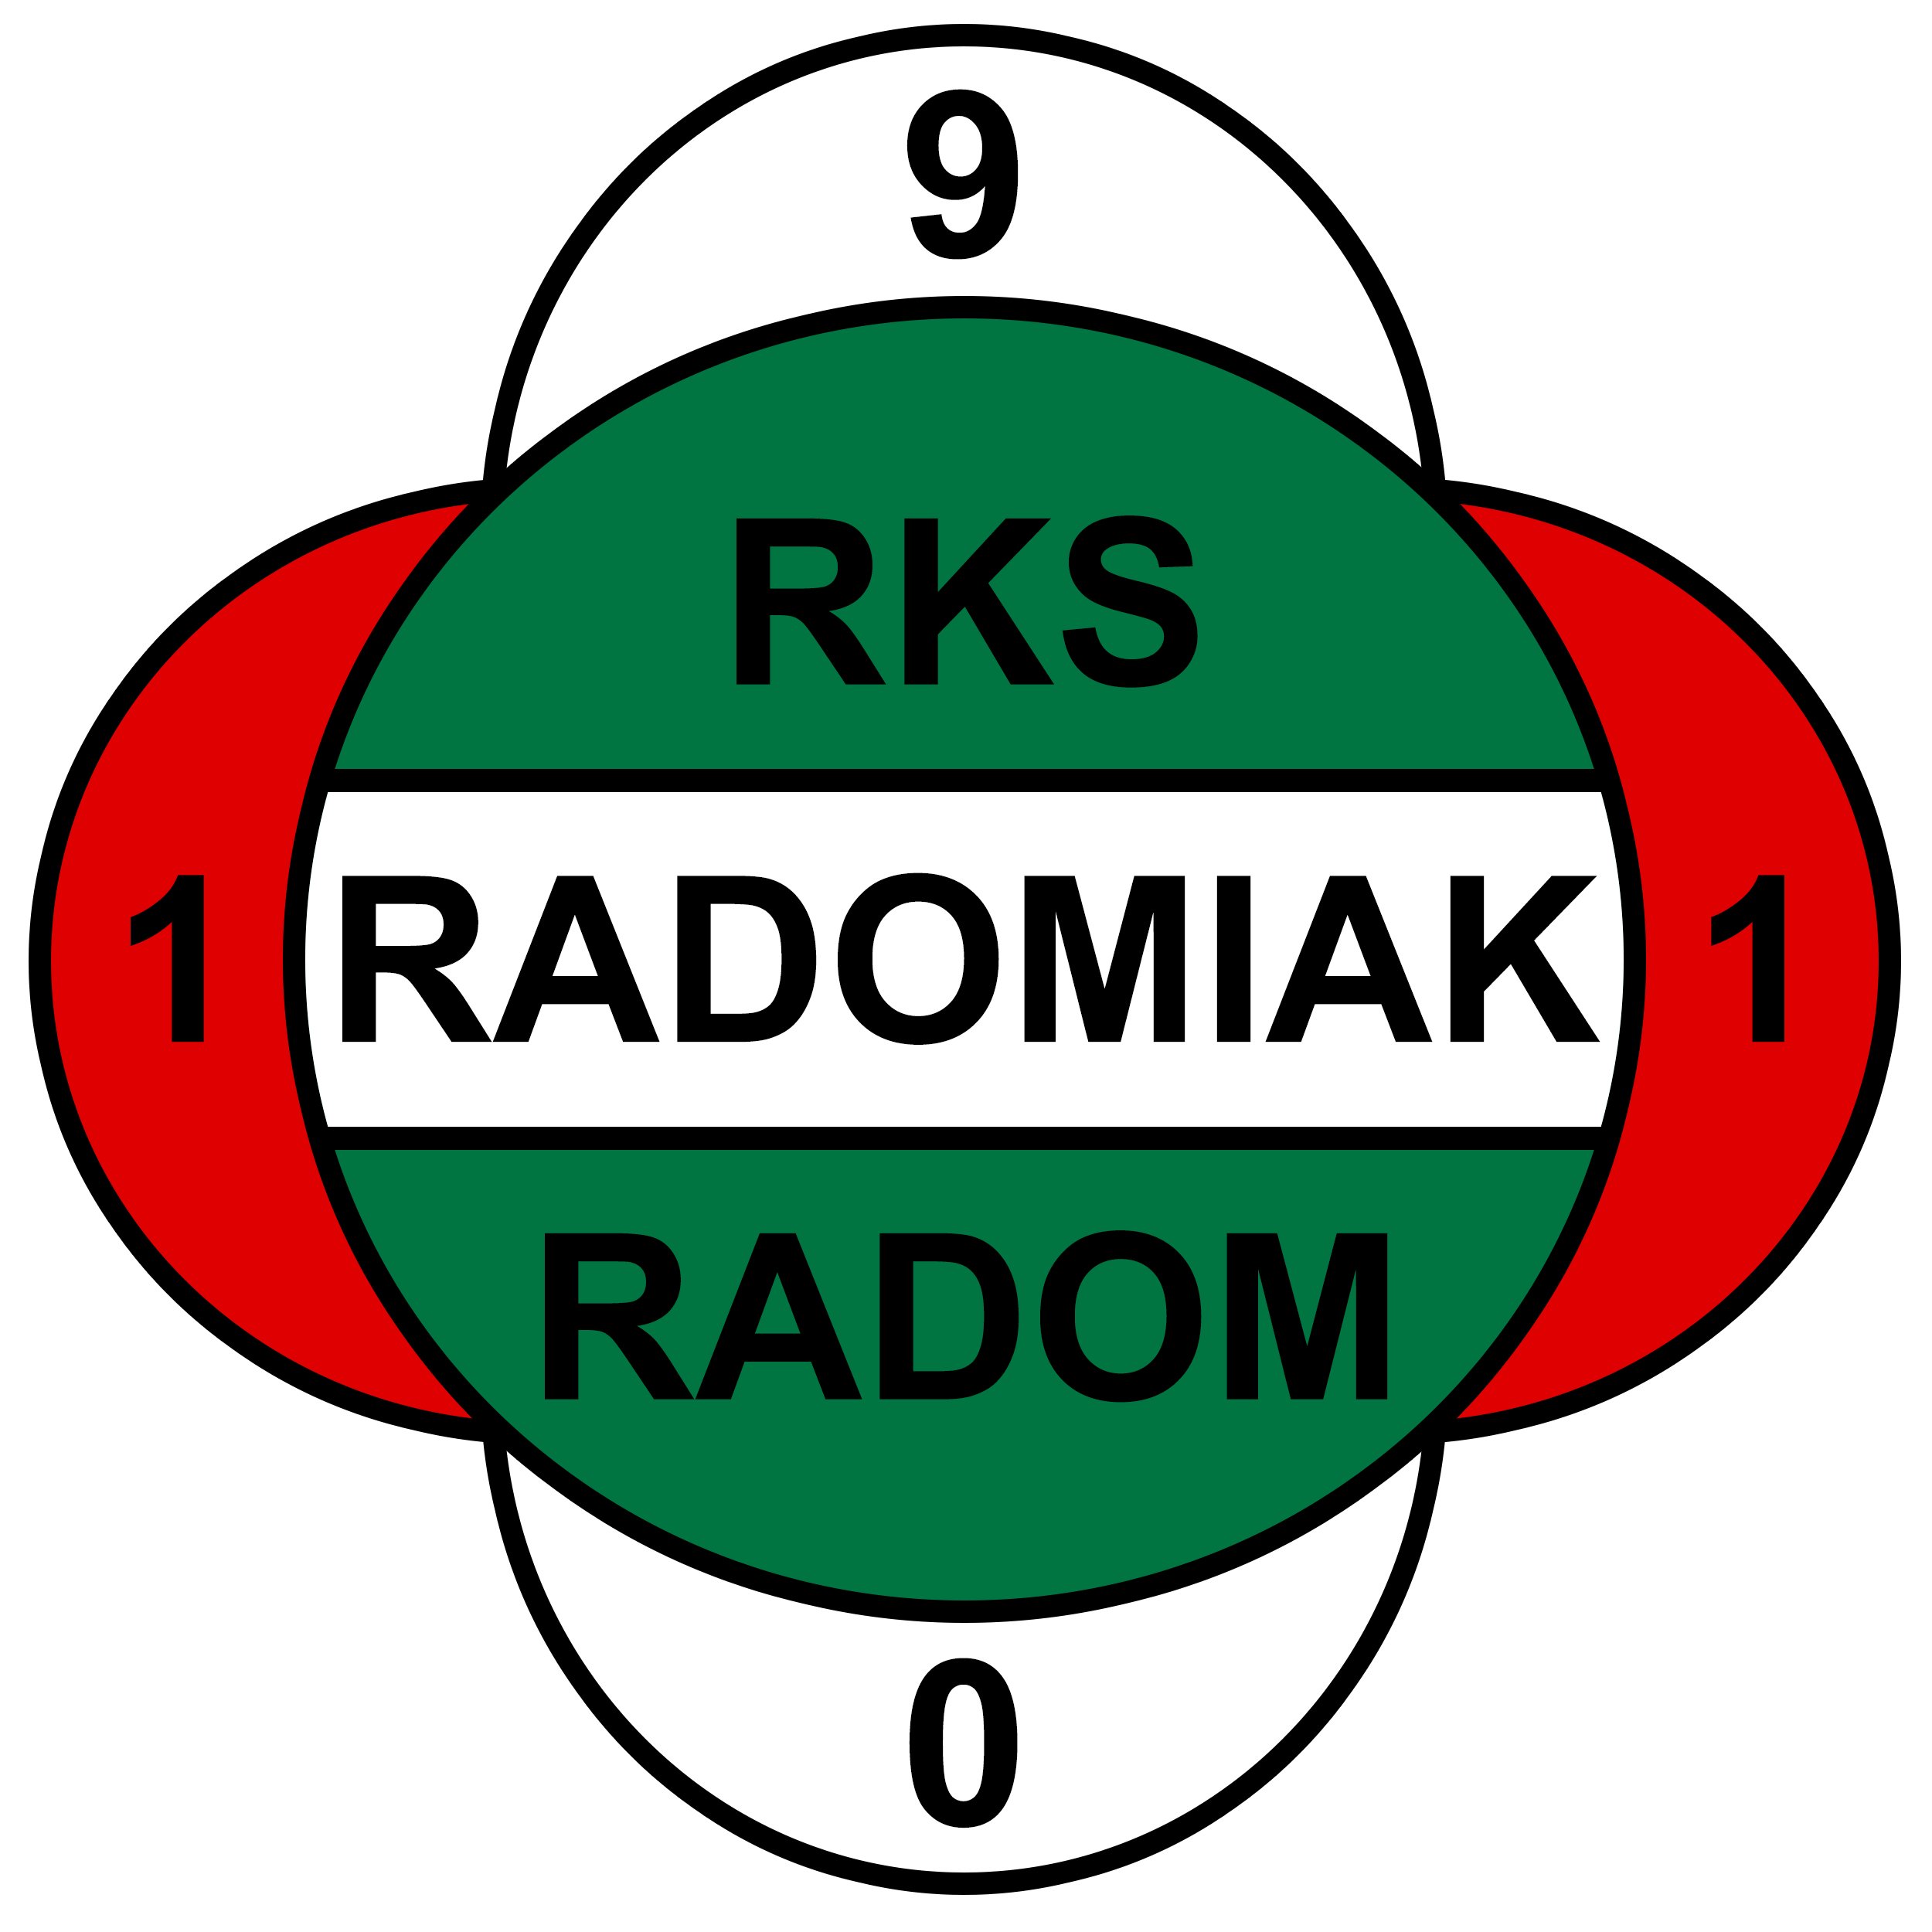 Radomiak Radom - Logo